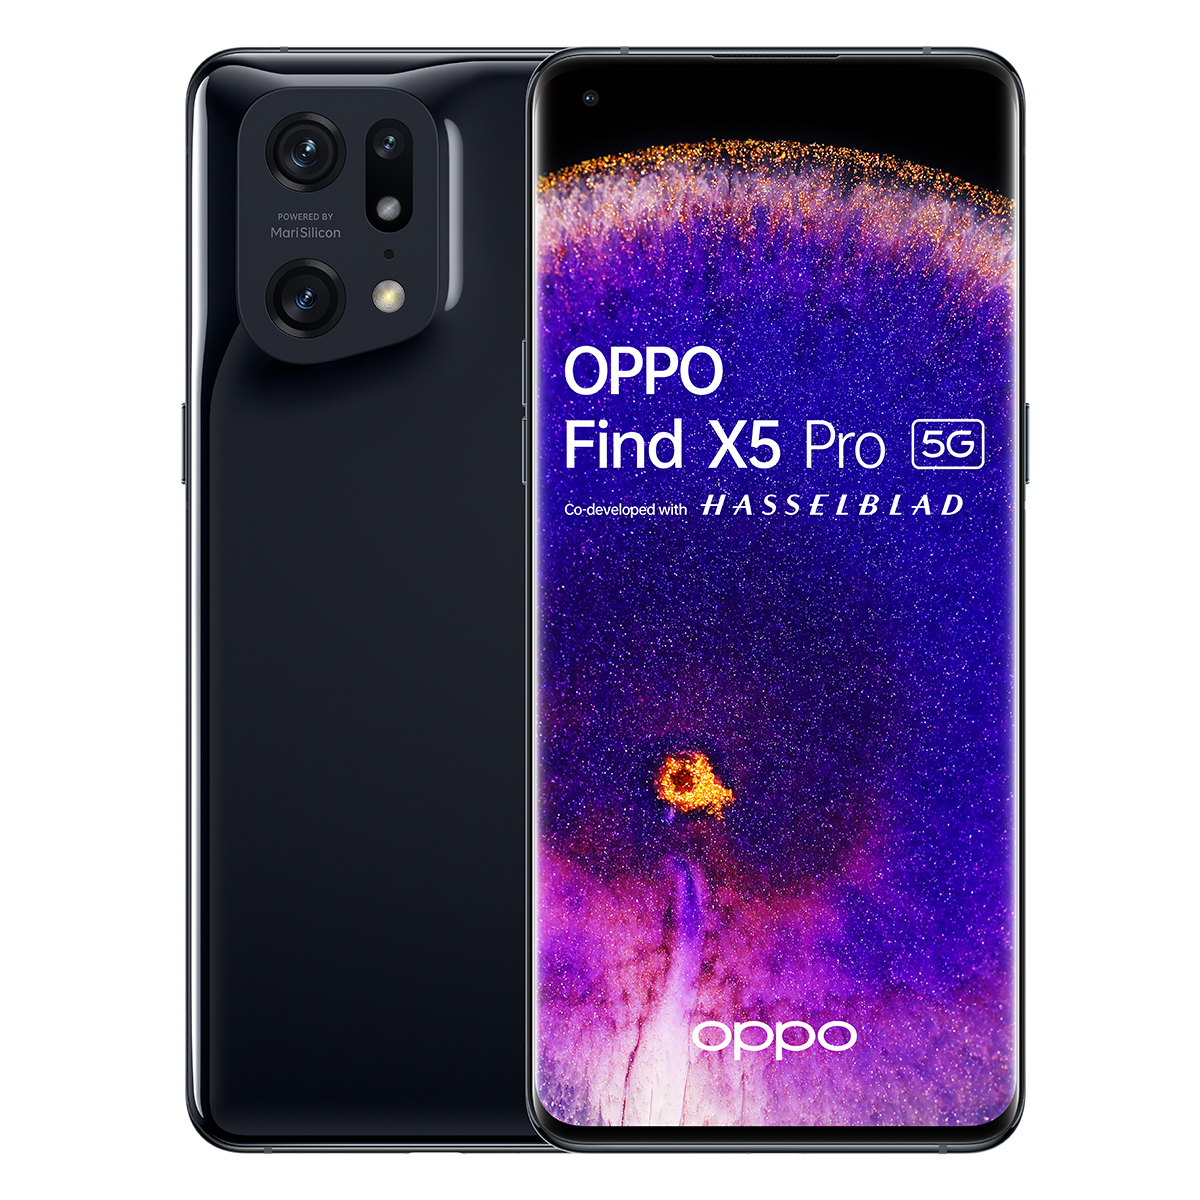 OPPO Find X5 Pro 256 GB / glaze black / (dualsim) / 5G